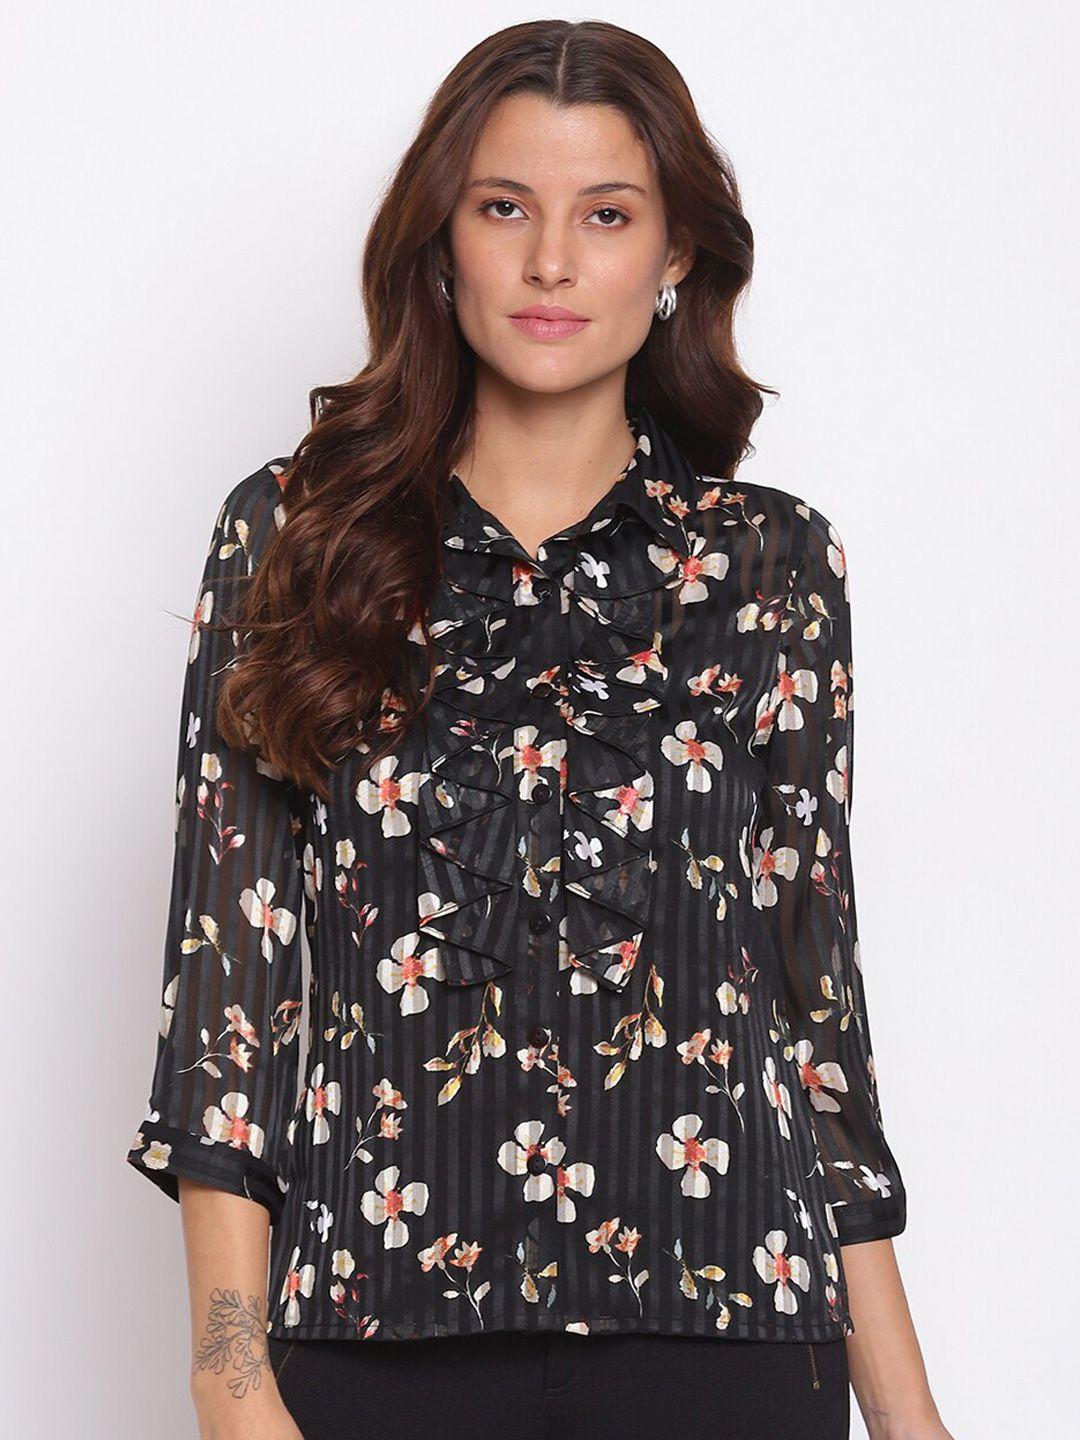 latin quarters black floral print shirt style top